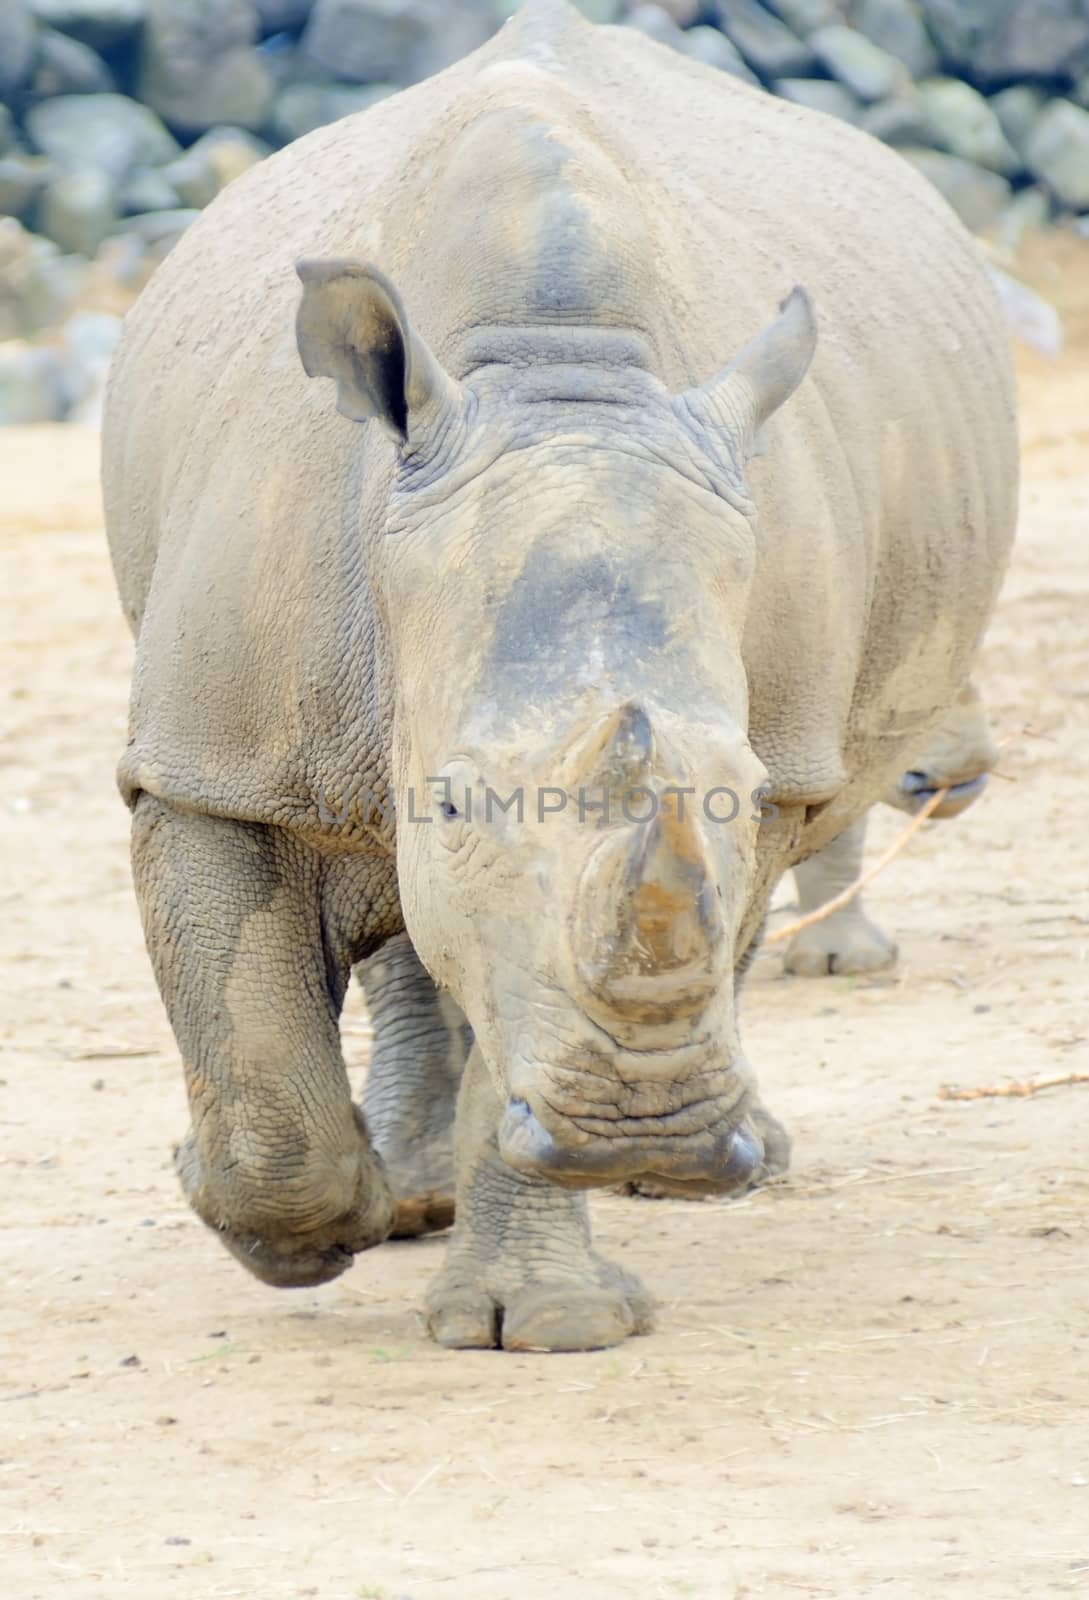 Rhinoceros charging straight at camera looking dangerous